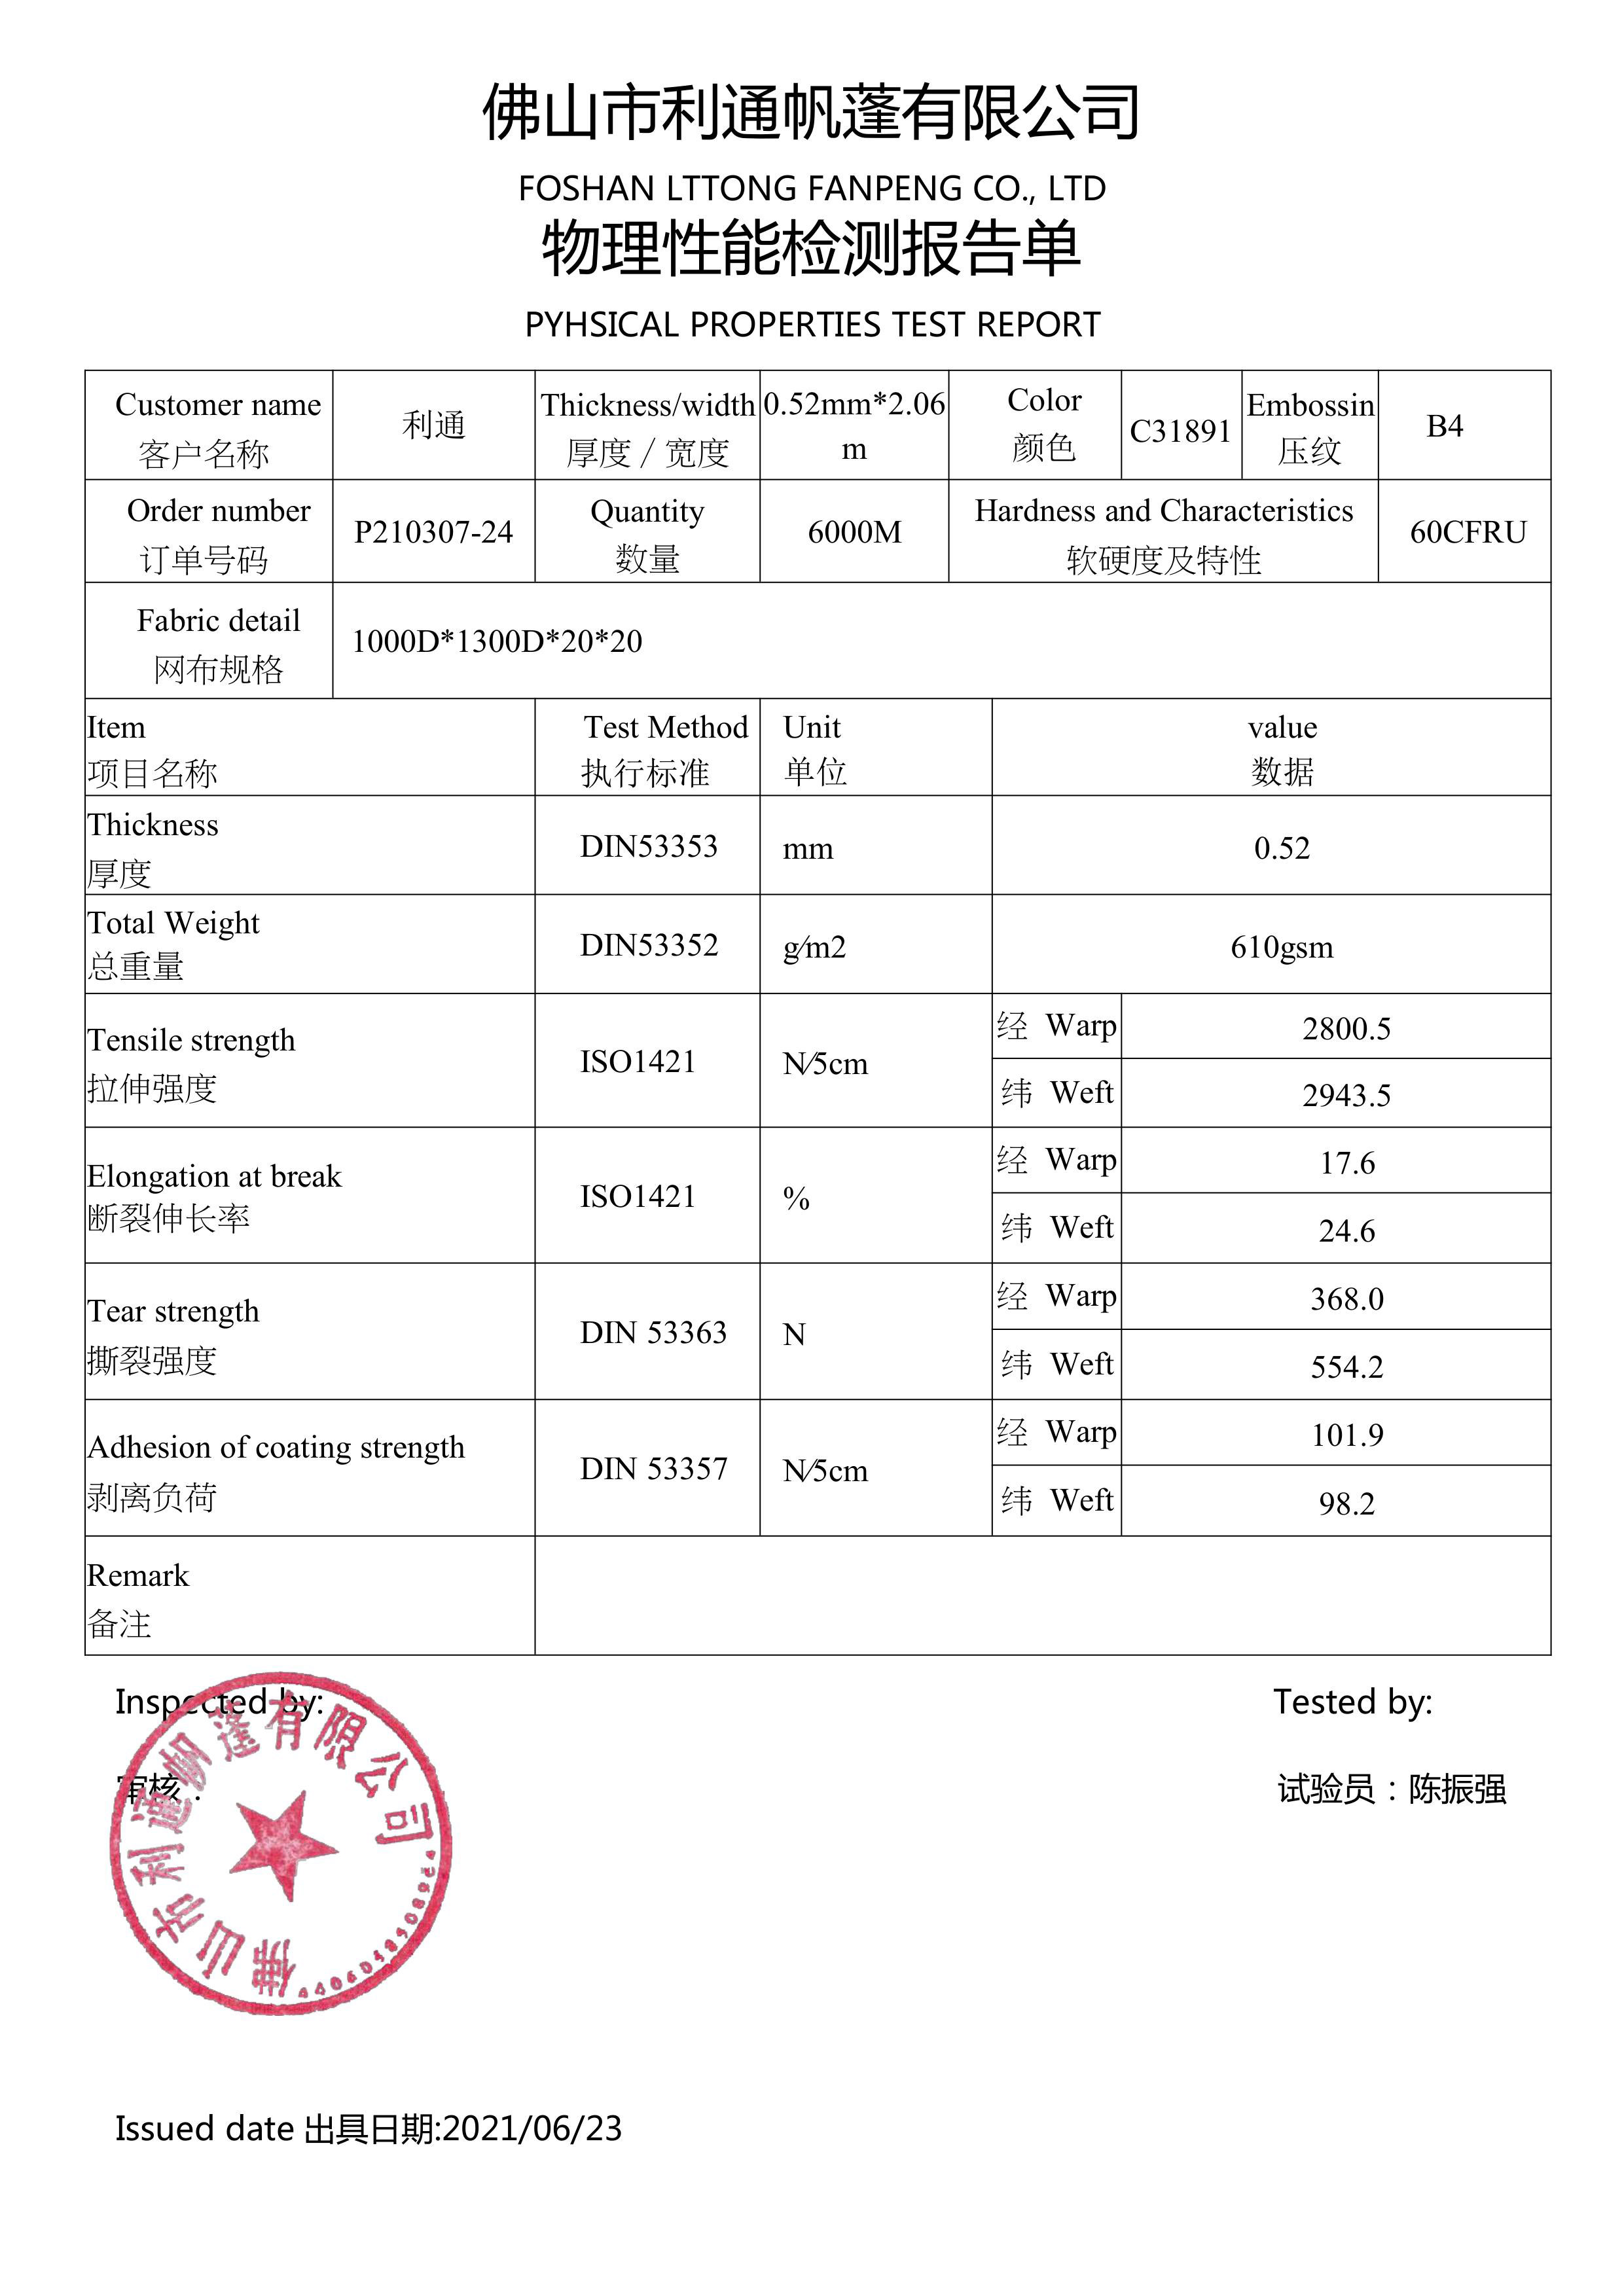 Data sheet for 0.52mm PVC coated tarpaulin